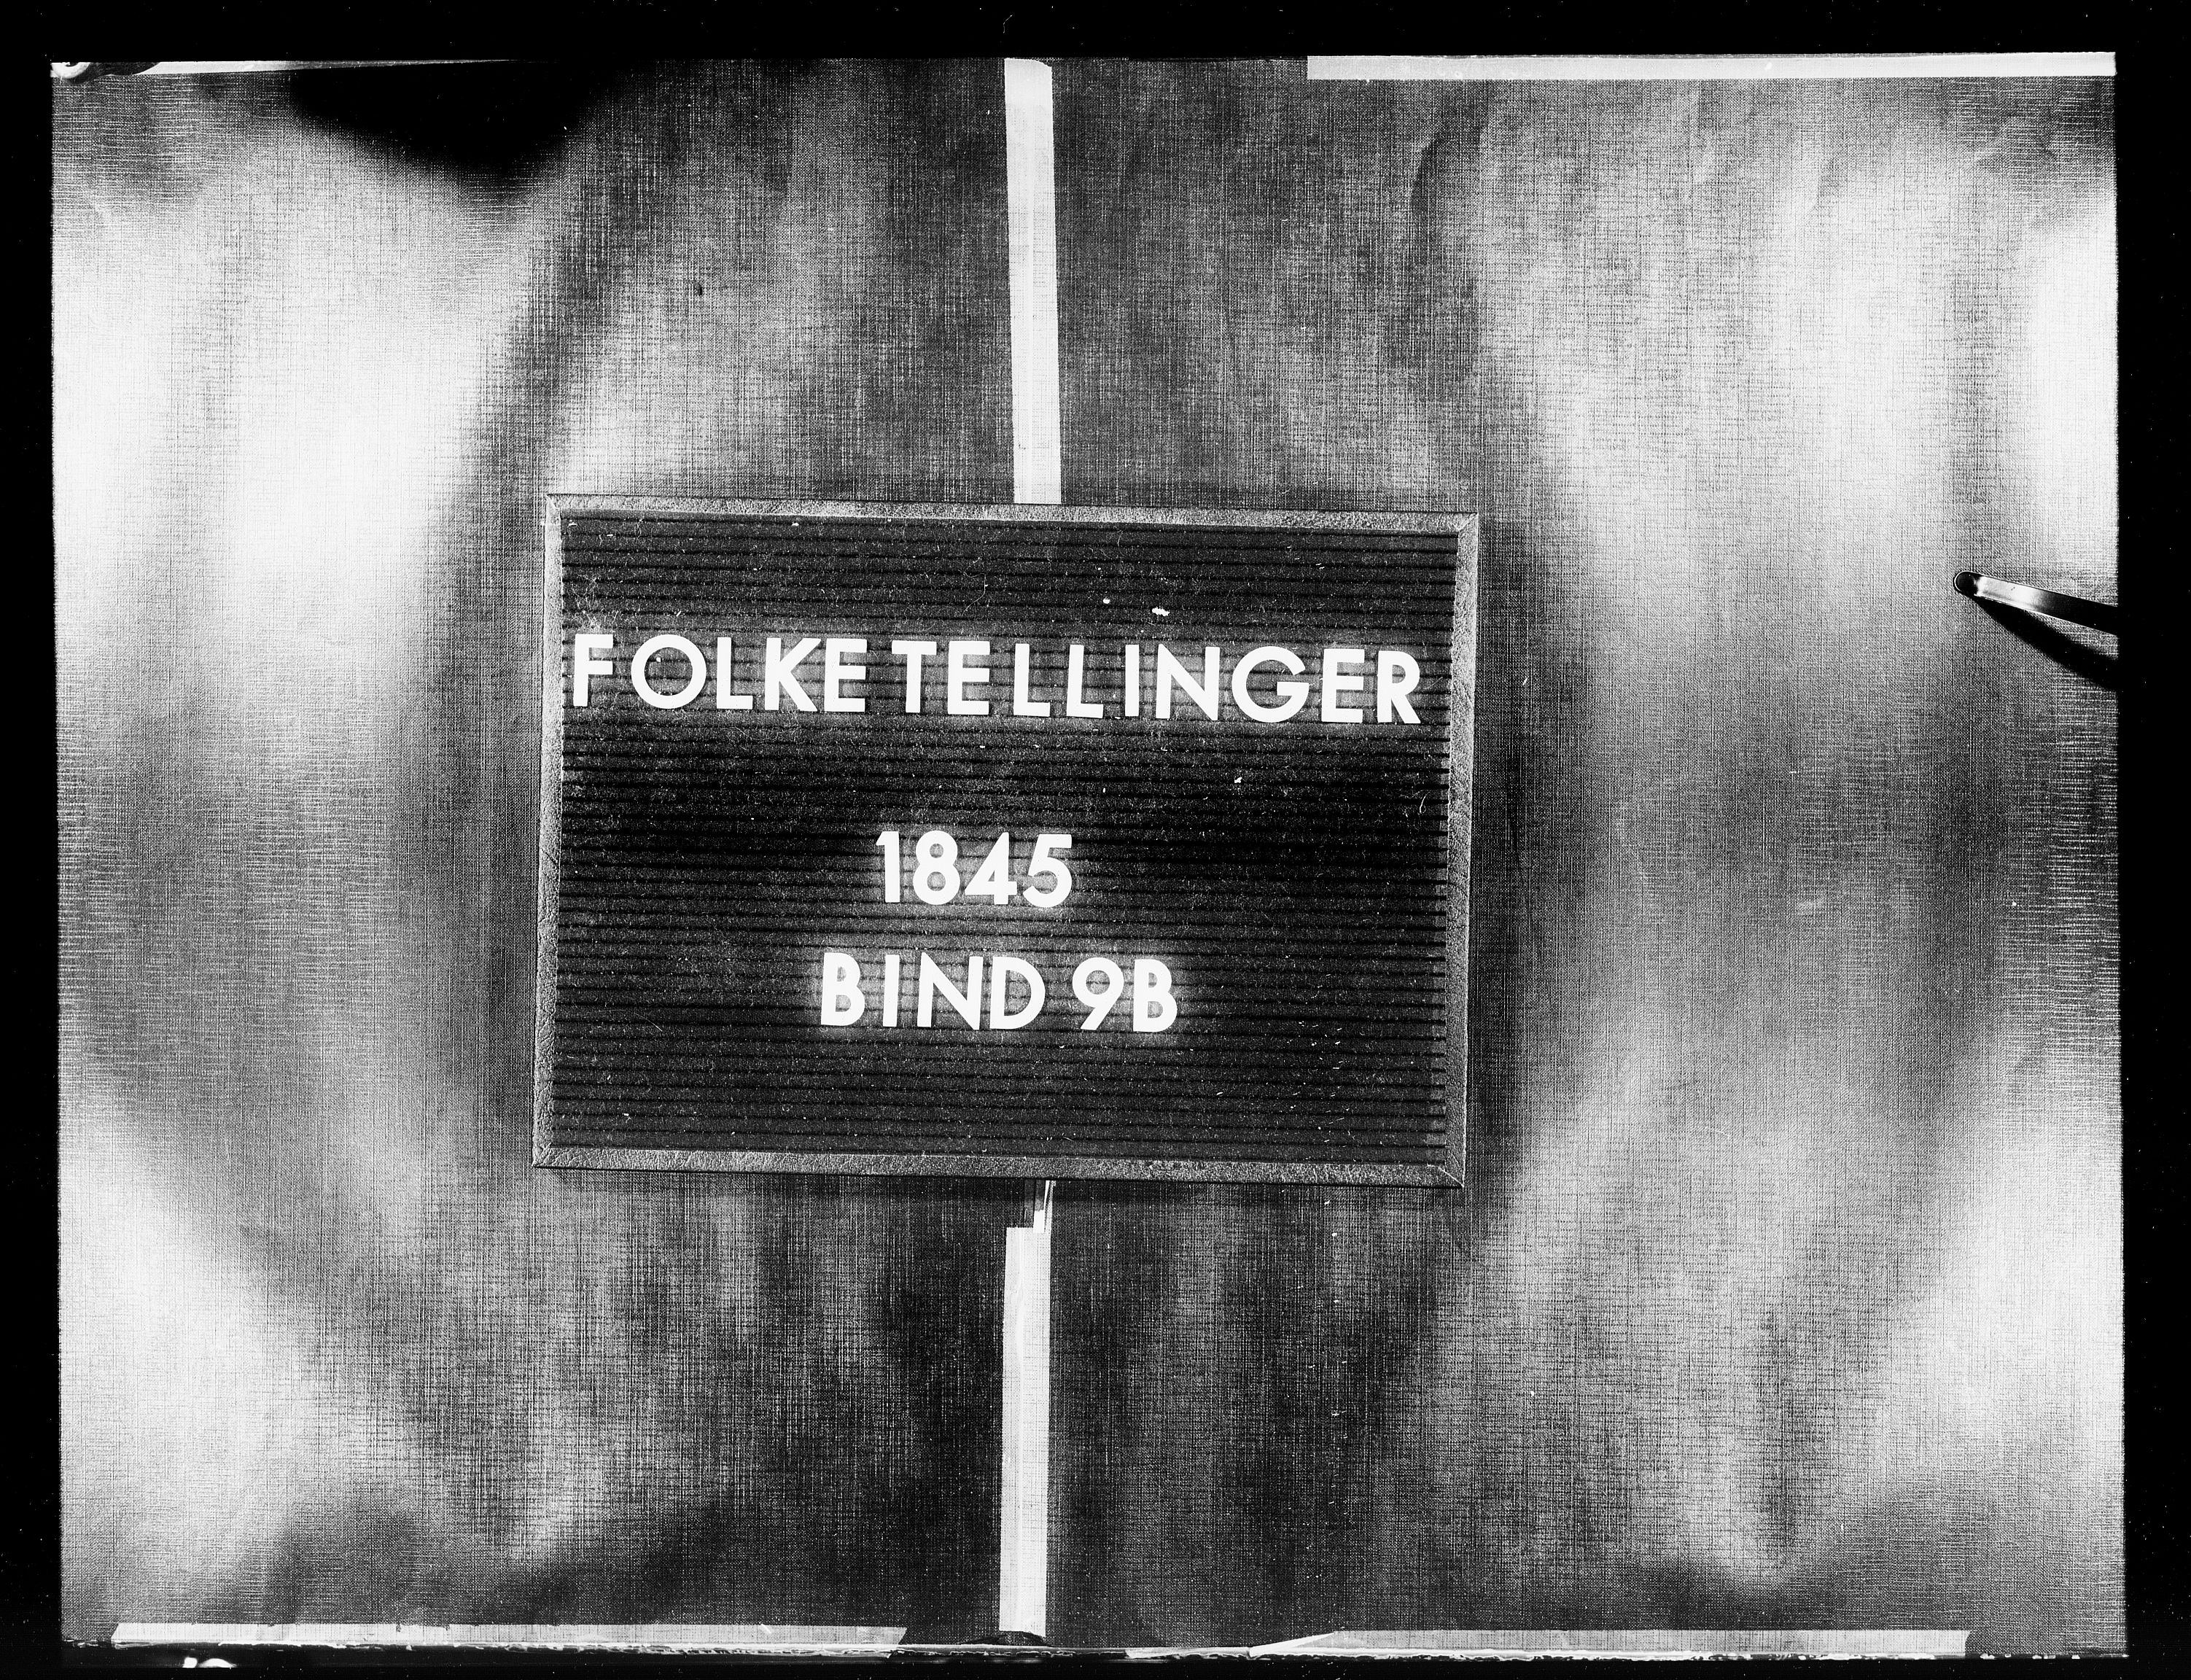 RA, Folketellingen 1845, bind 9B: Nordland amt, 1845